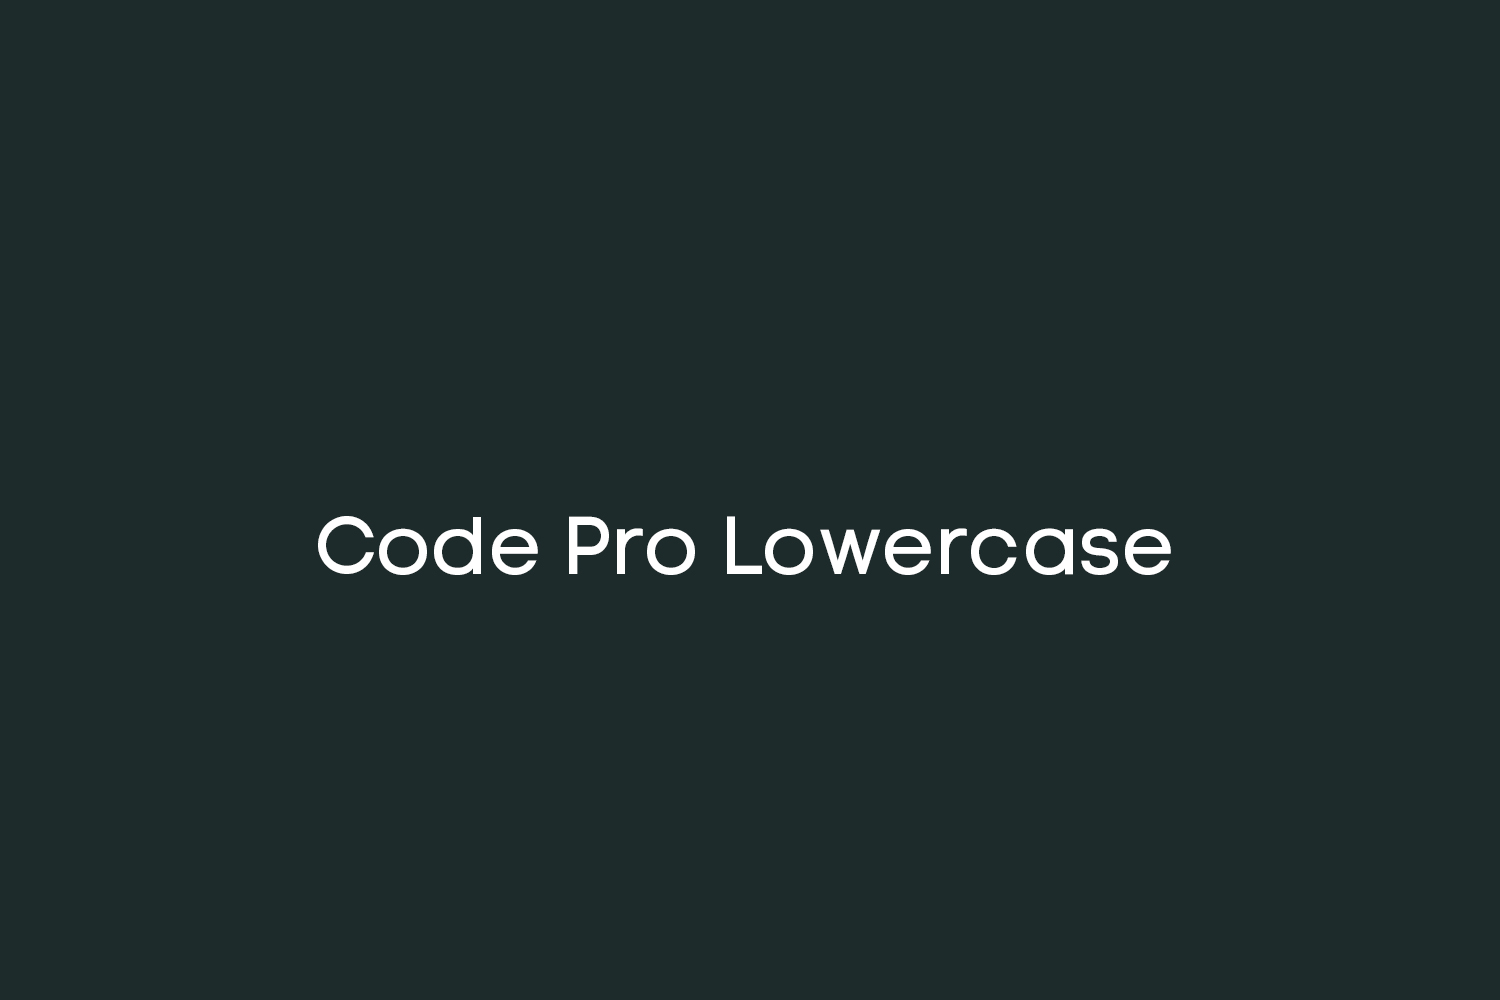 Code Pro Lowercase